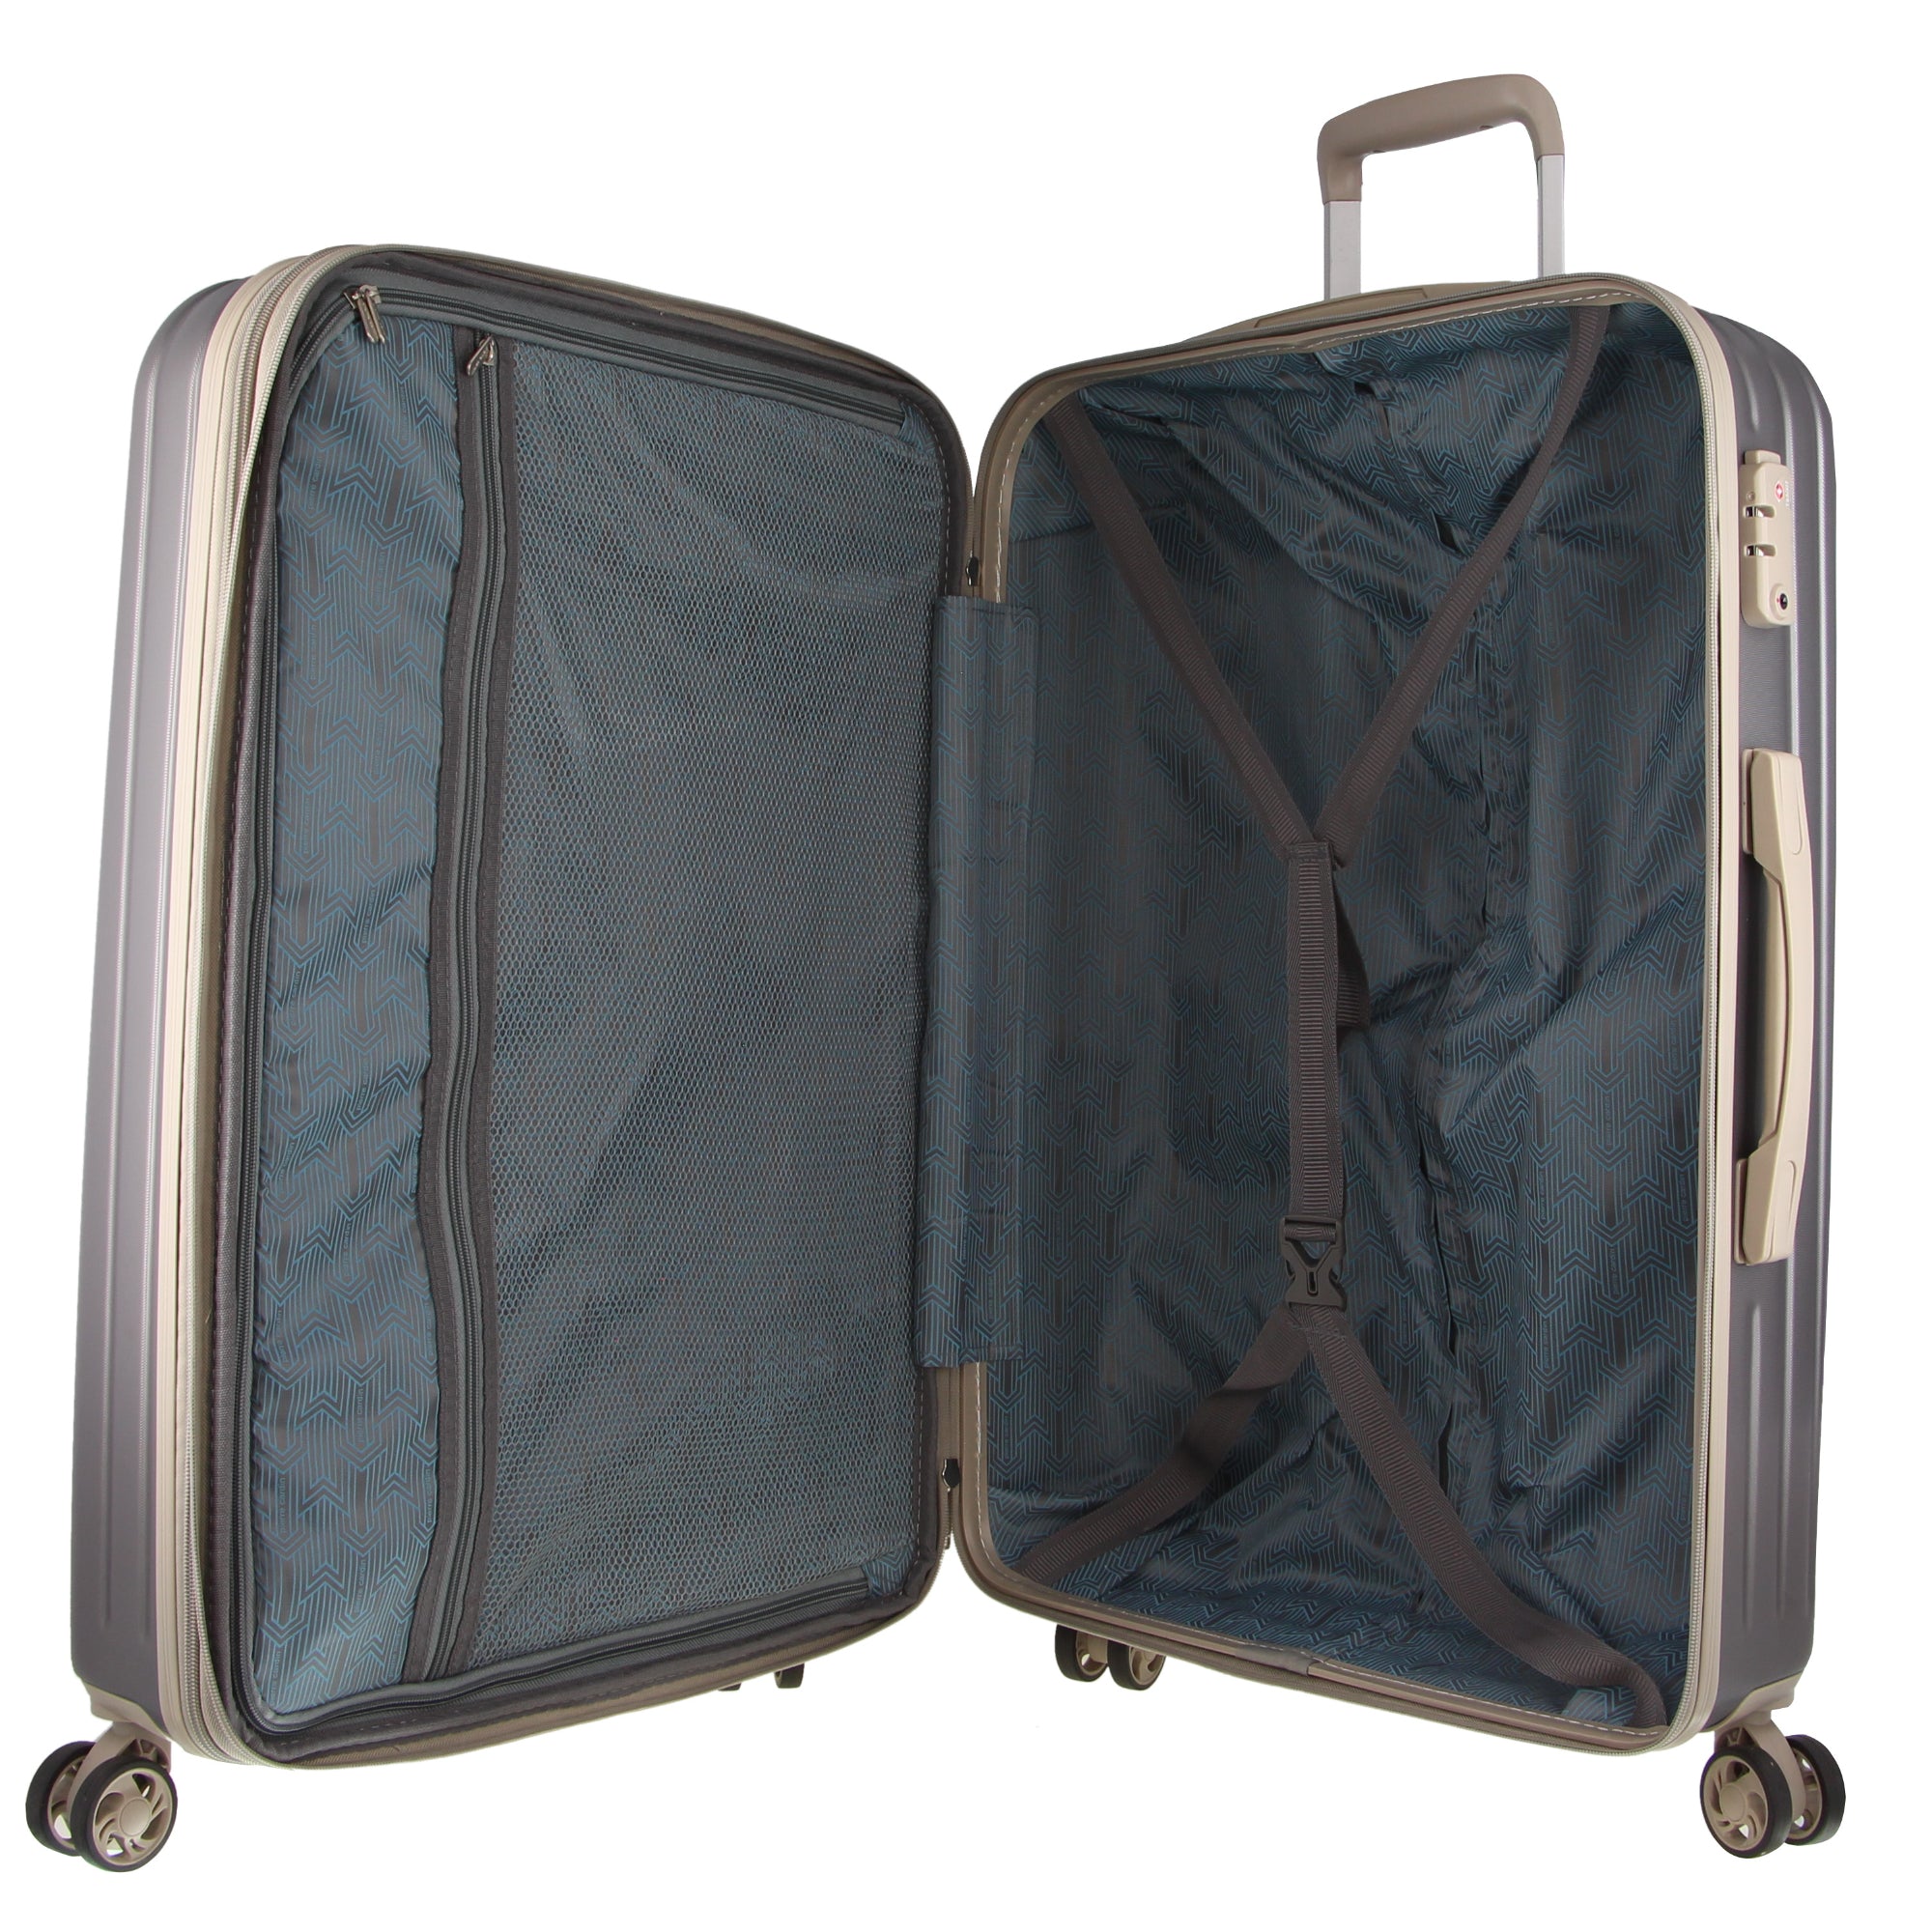 Pierre Cardin 70cm MEDIUM Hard-Shell Suitcase in Graphite